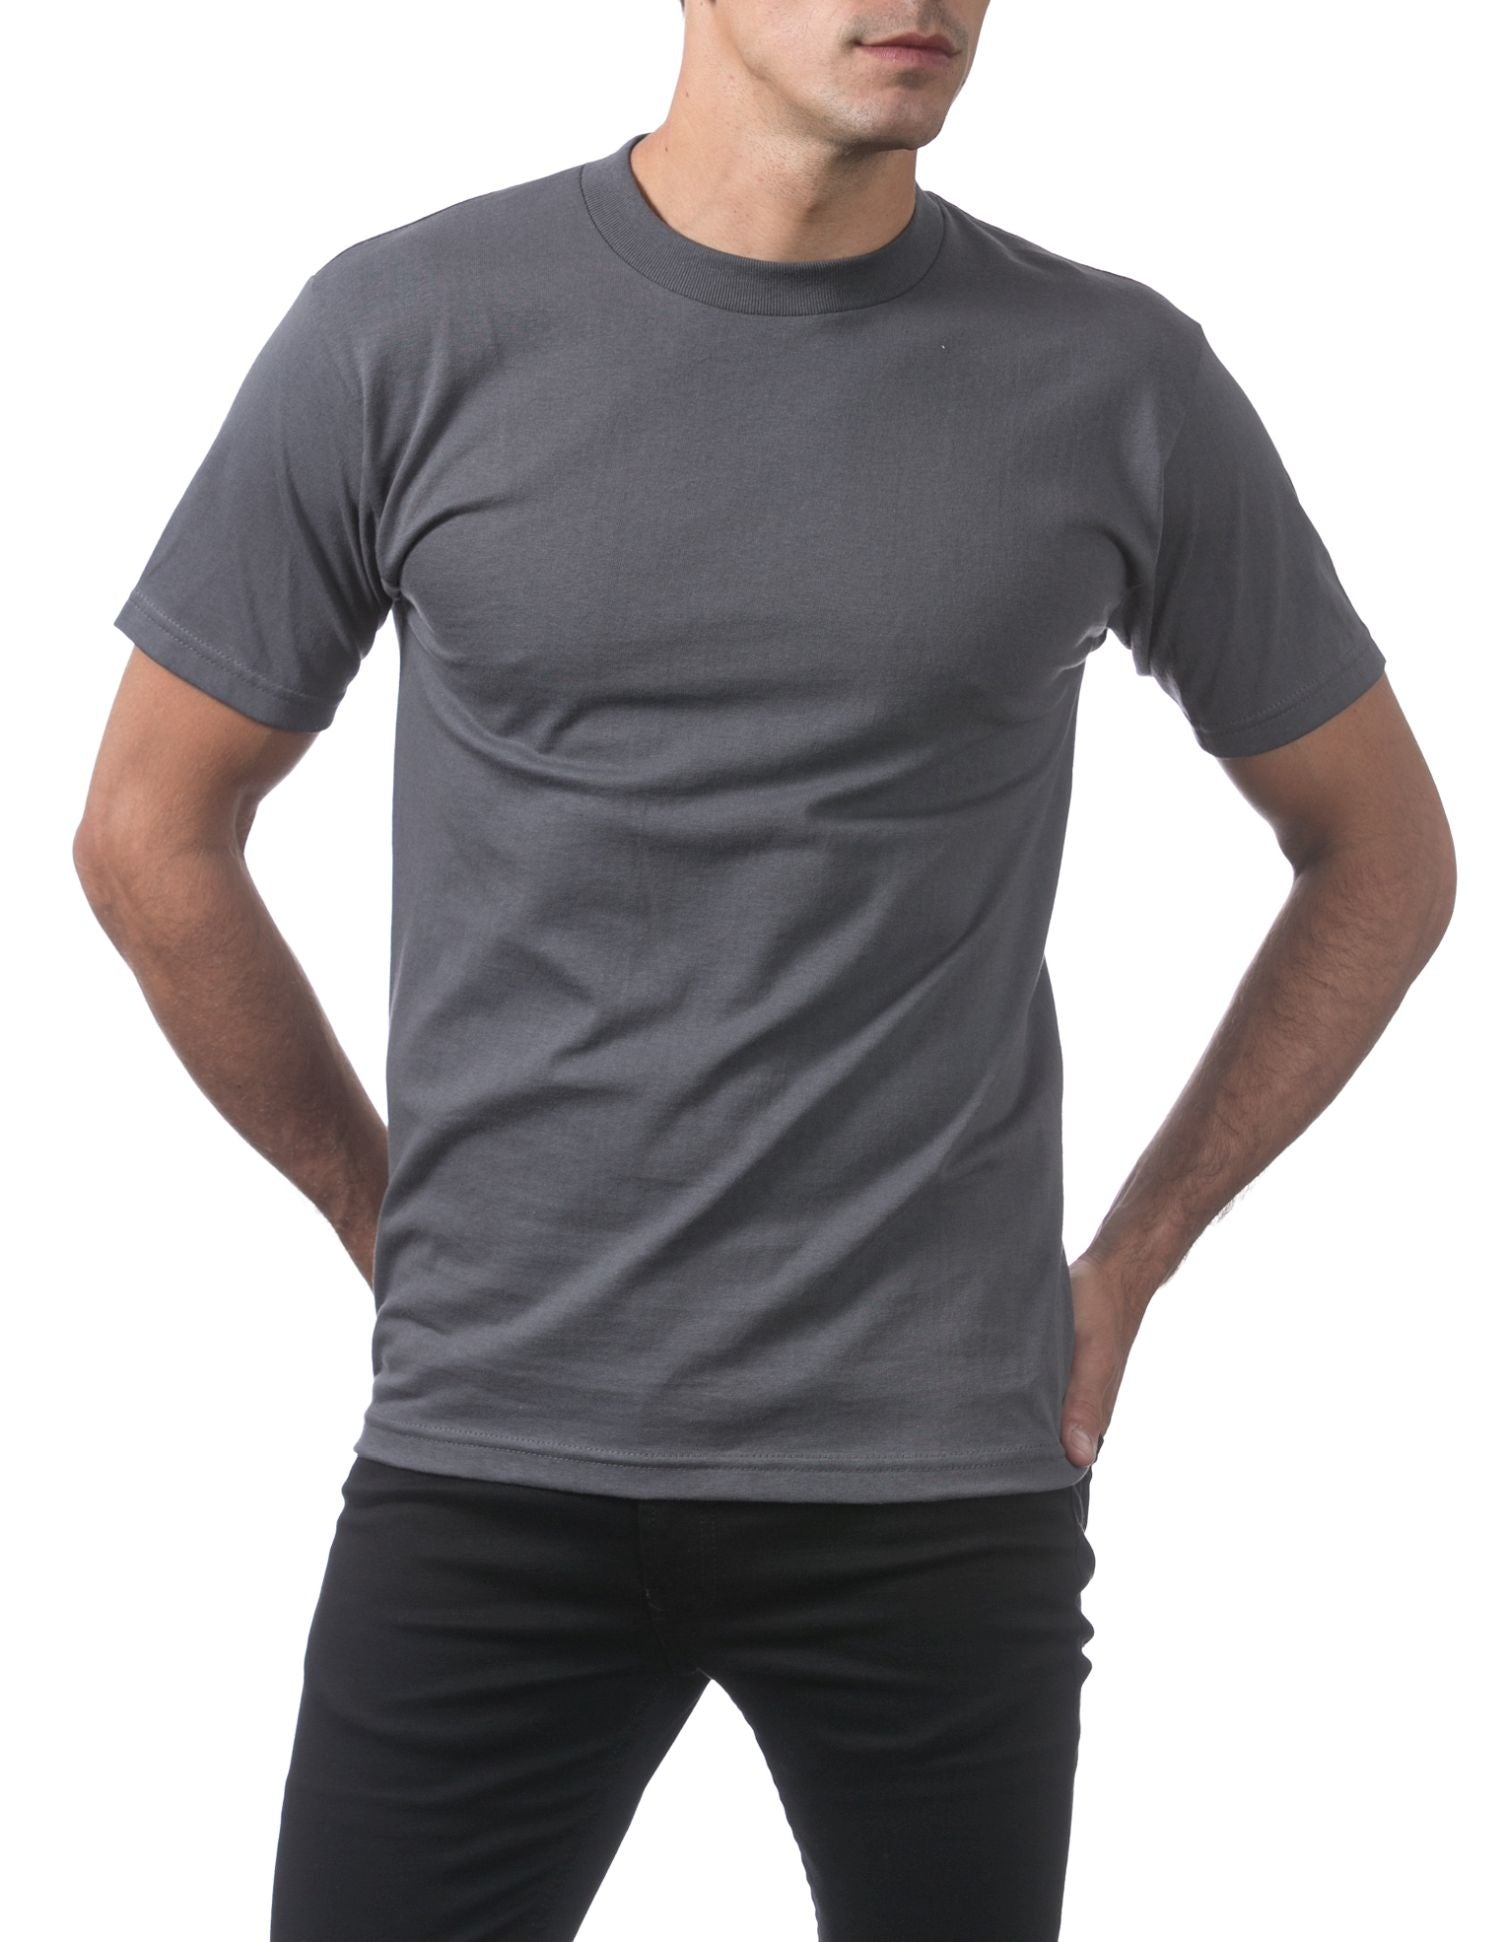 Pro Club Men's Comfort Cotton Short Sleeve T-Shirt - Graphite - X-Large - Pro-Distributing